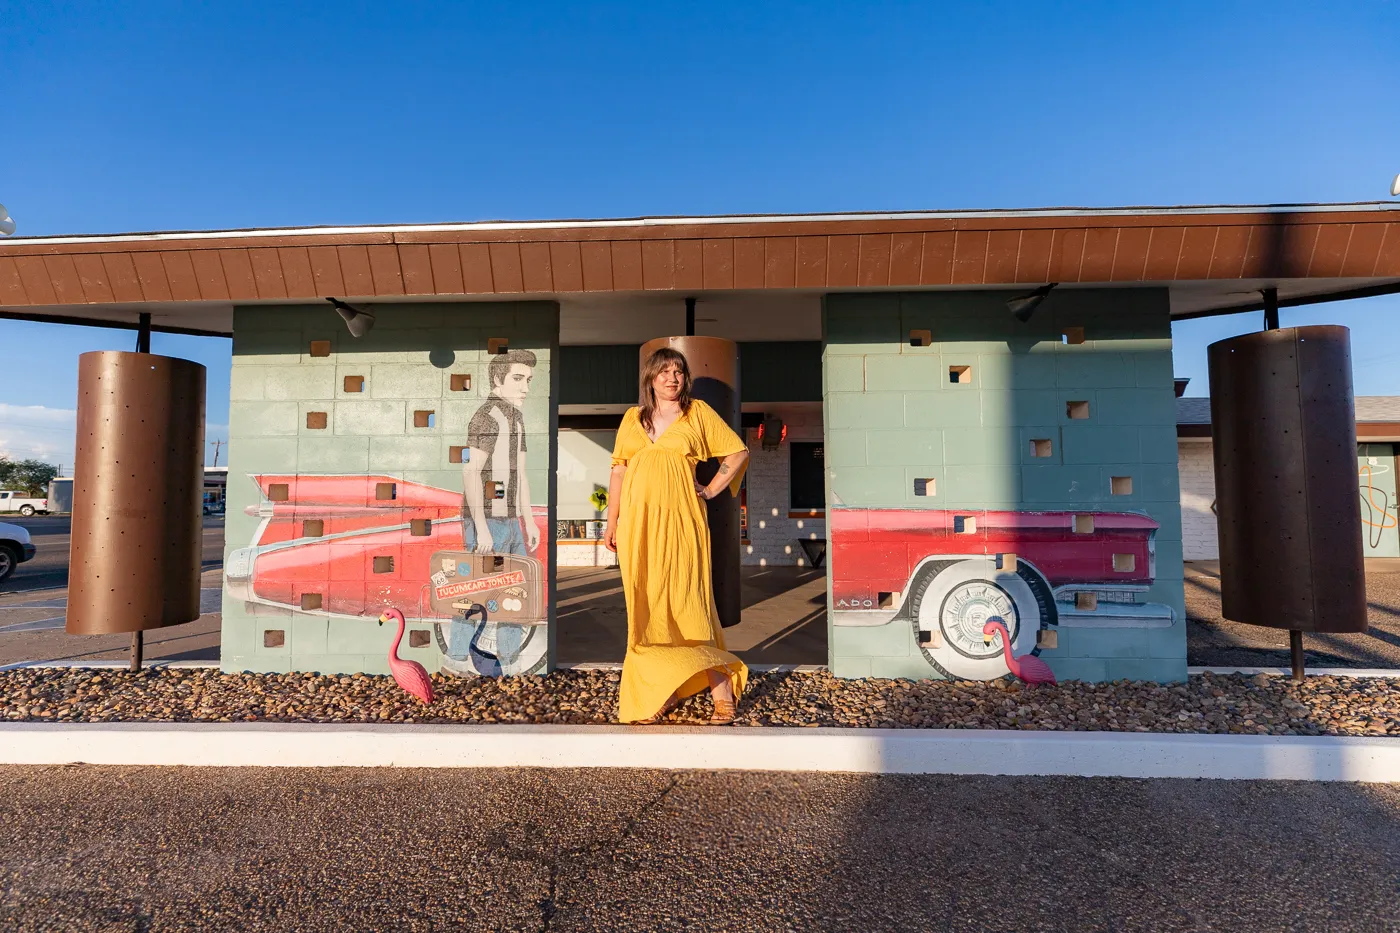 Elvis and Pink Cadillac Mural at Motel Safari in Tucumcari, New Mexico (Route 66 Motel)